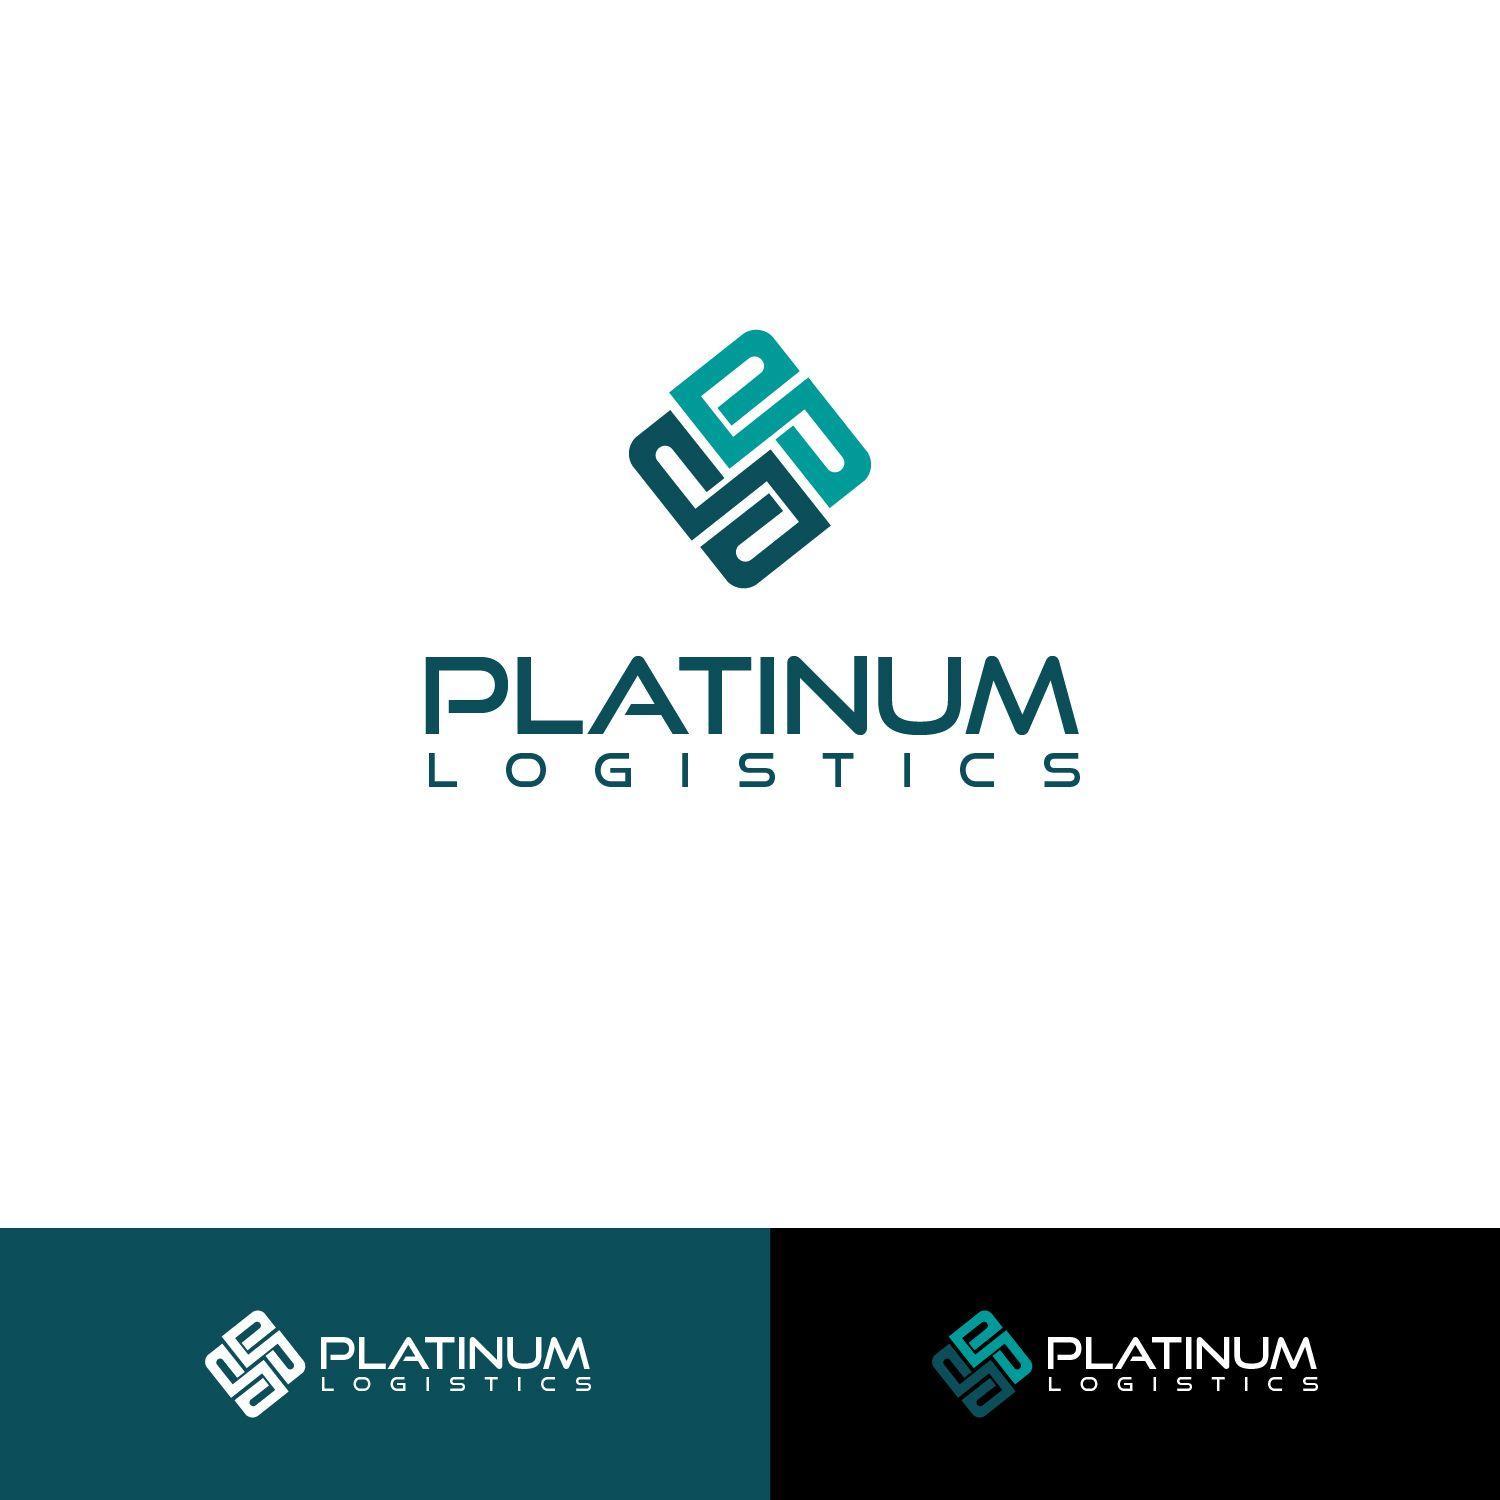 Logistics Logo - Modern Logo Designs. Logistic Logo Design Project for Platinum